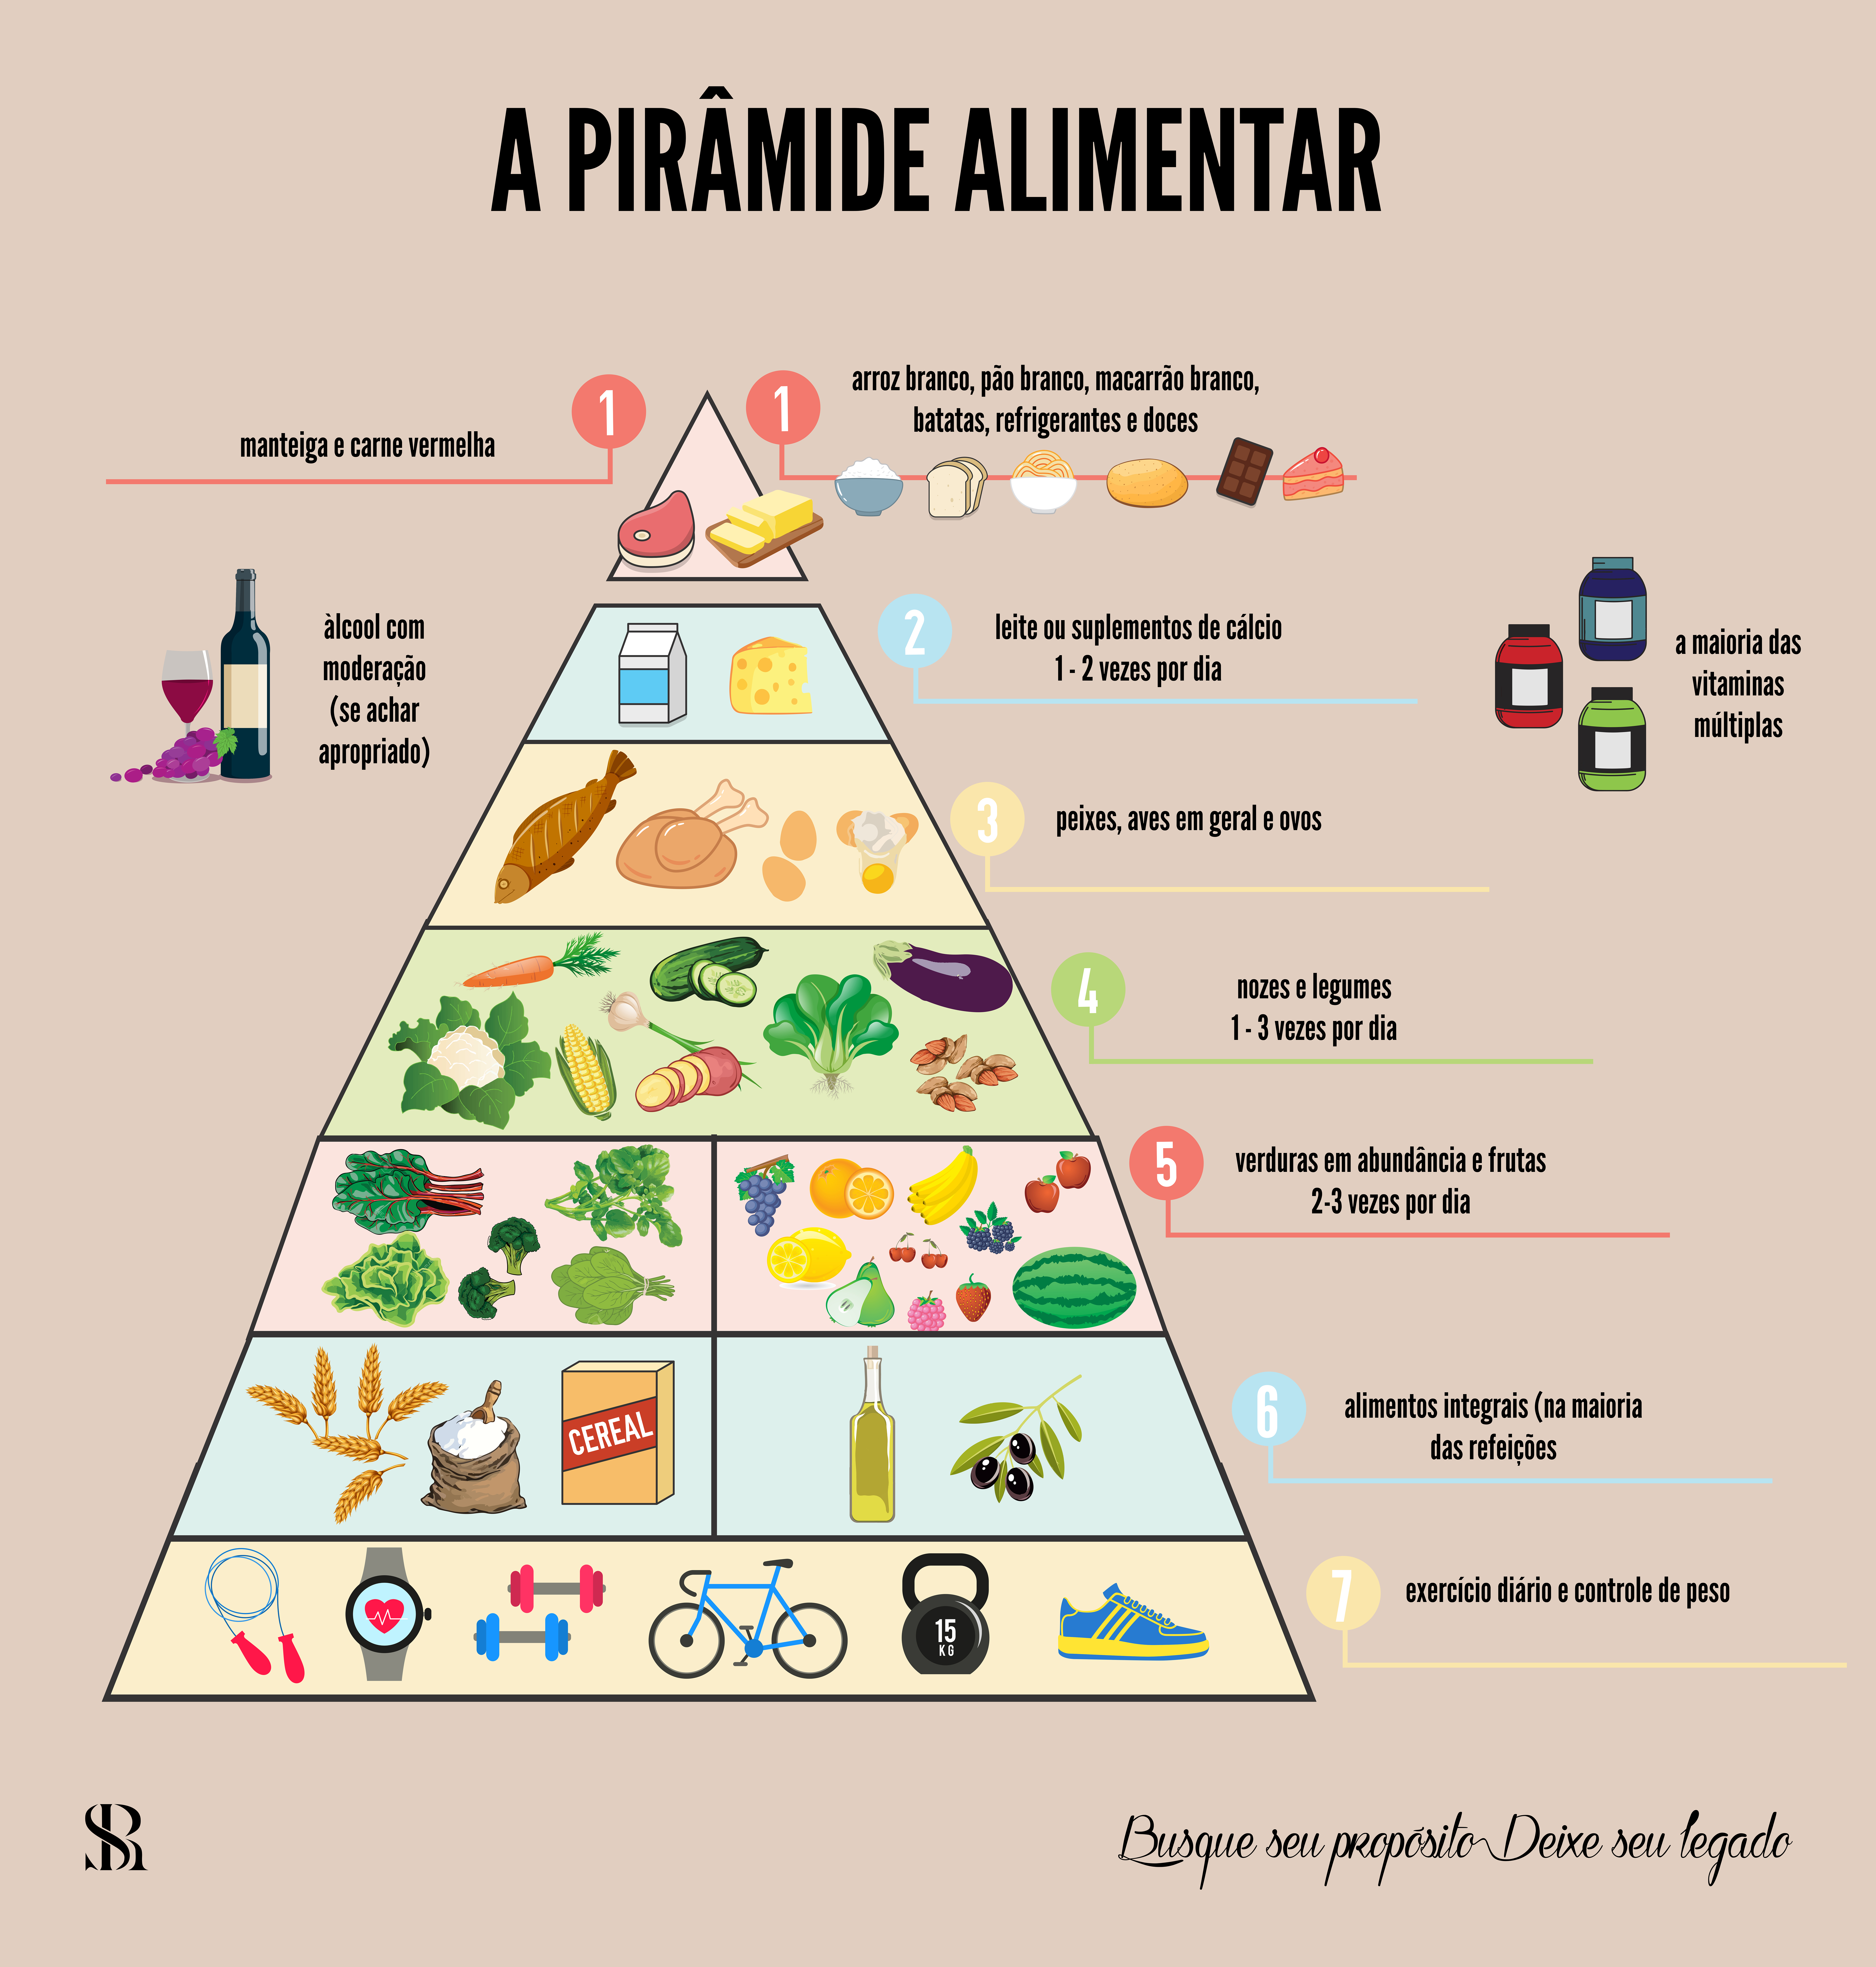 Pirâmide Alimentar